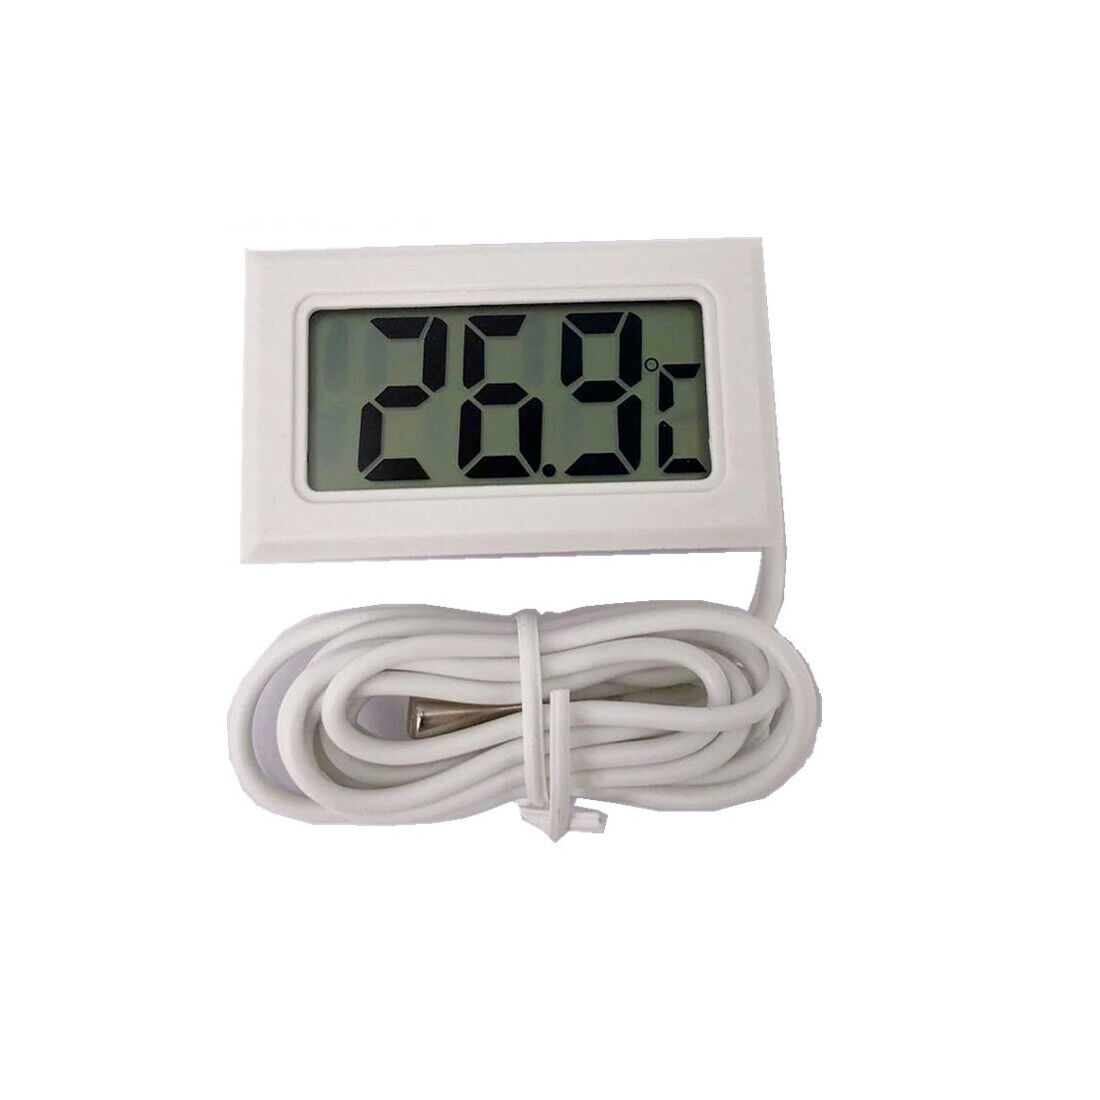 1 lcd digital 通信販売 thermometer temperature -50 degrees white 110 + 出産祝いなども豊富 ~